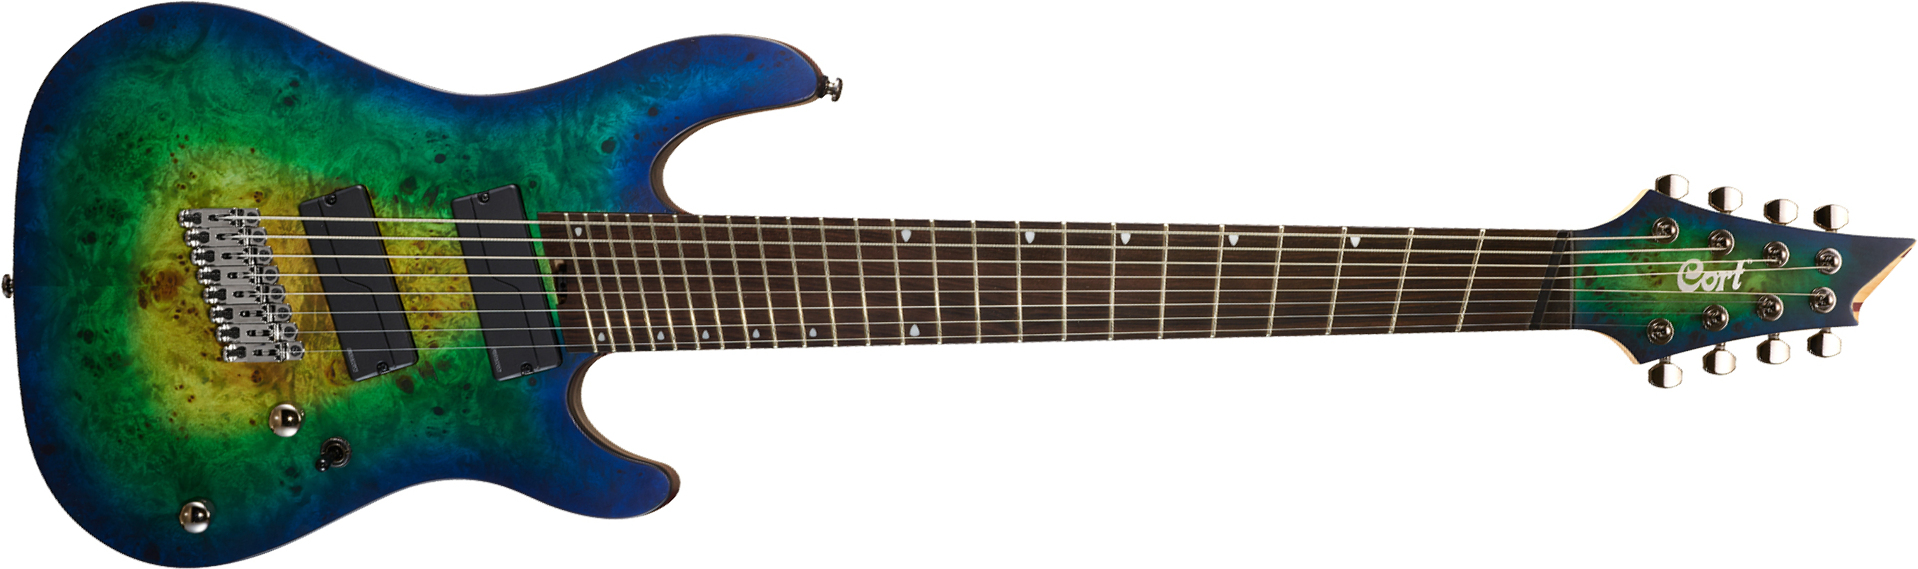 Cort Kx508ms 8c Multi Diapason Baryton Hh Fishman Fluence Eb - Mariana Blue Burst - 8 and 9 string electric guitar - Main picture